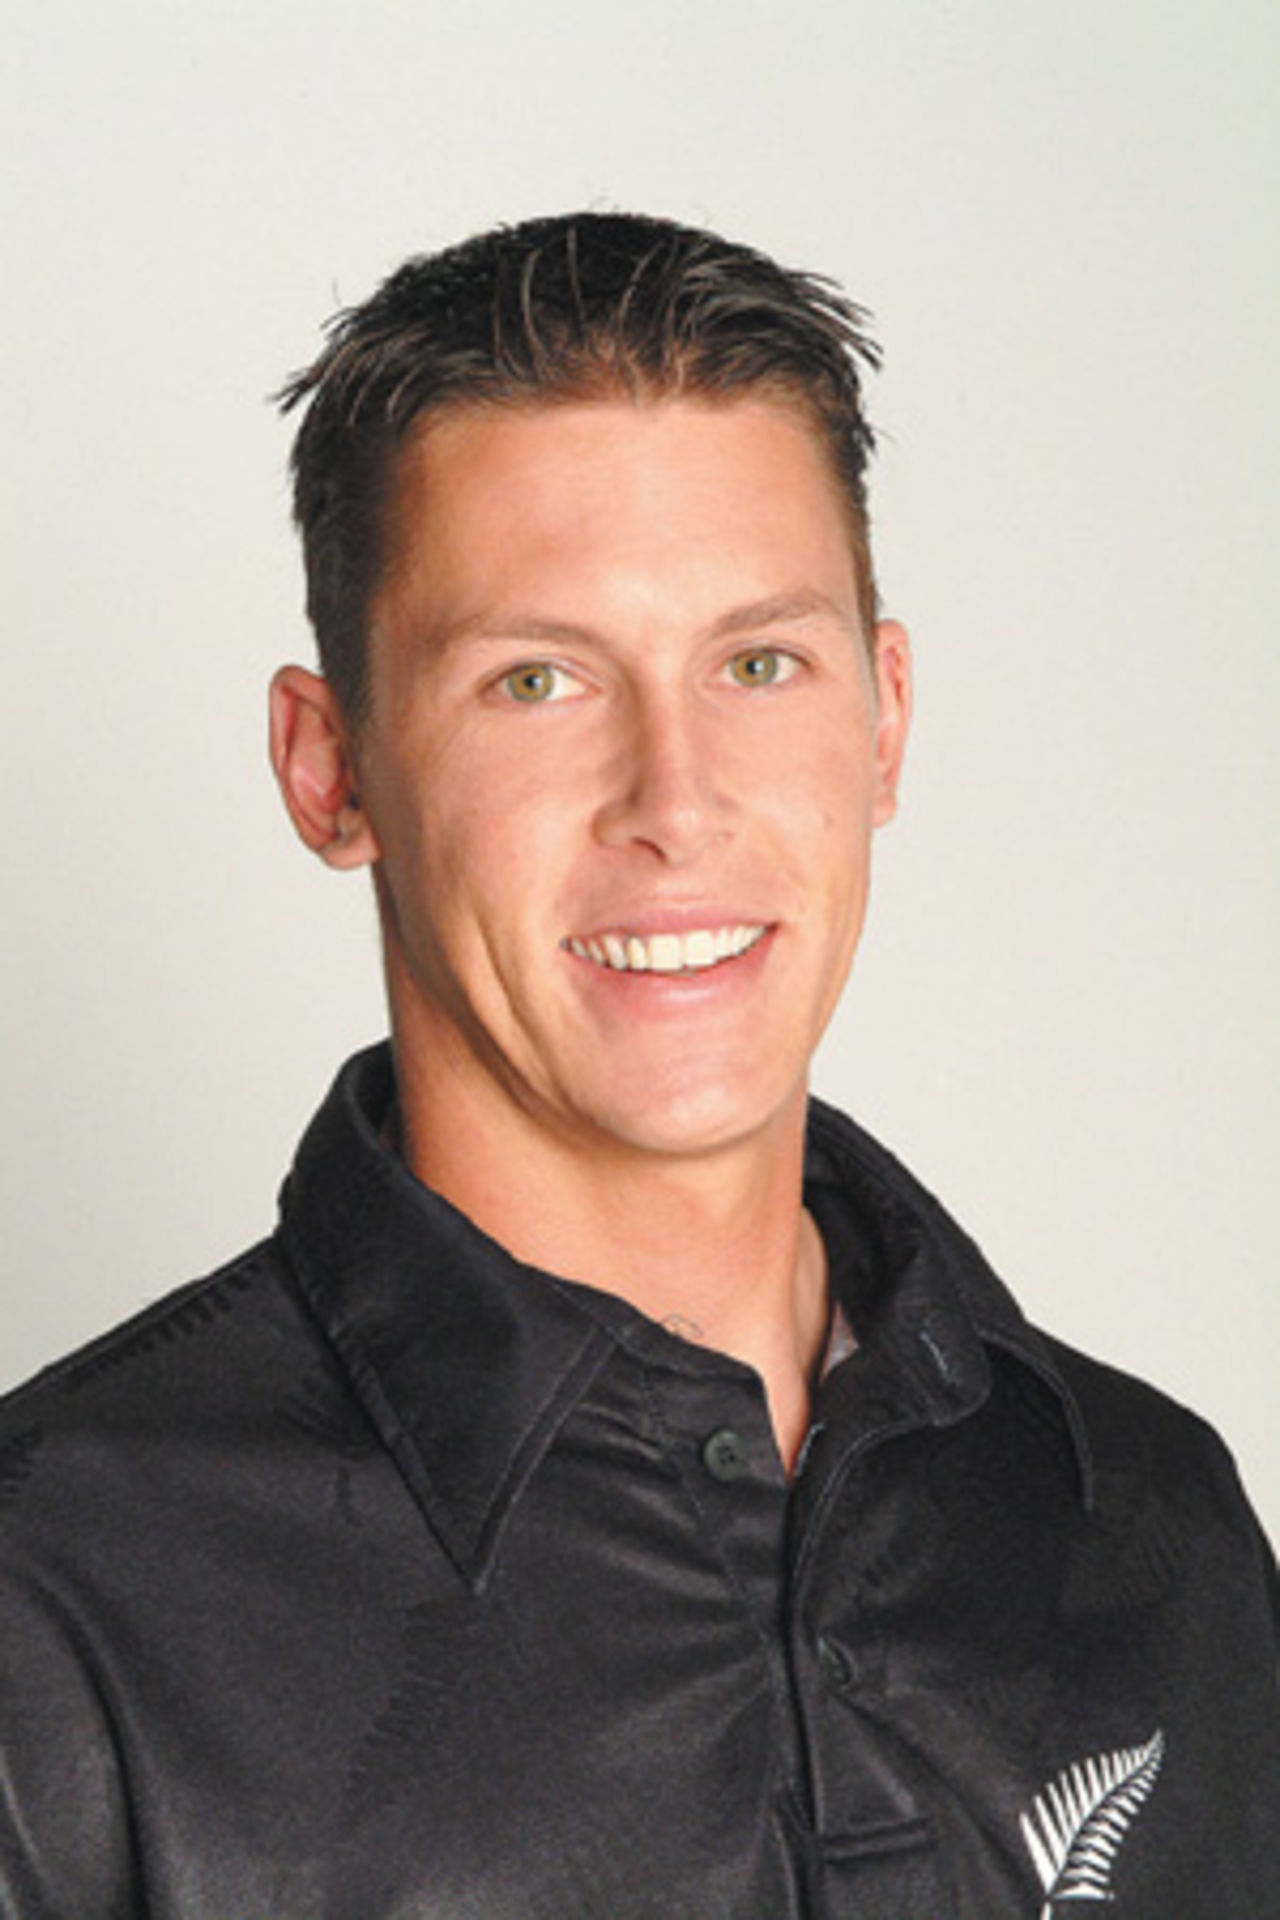 Portrait of Joseph Yovich - New Zealand player in the 2002/03 season.